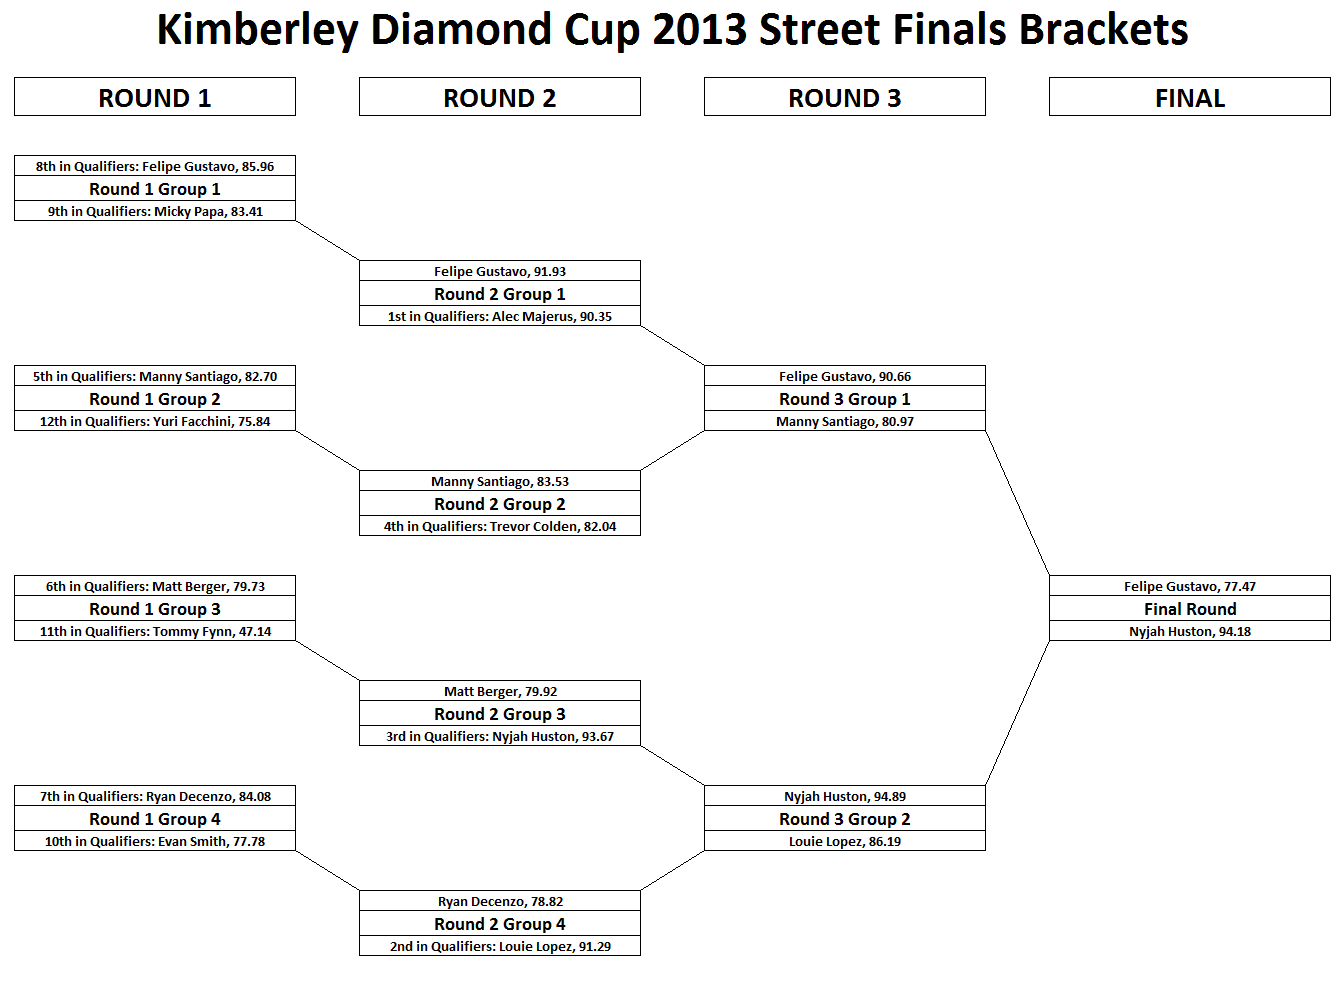 Kimberley Diamond Cup 2013 Street Finals Brackets Results